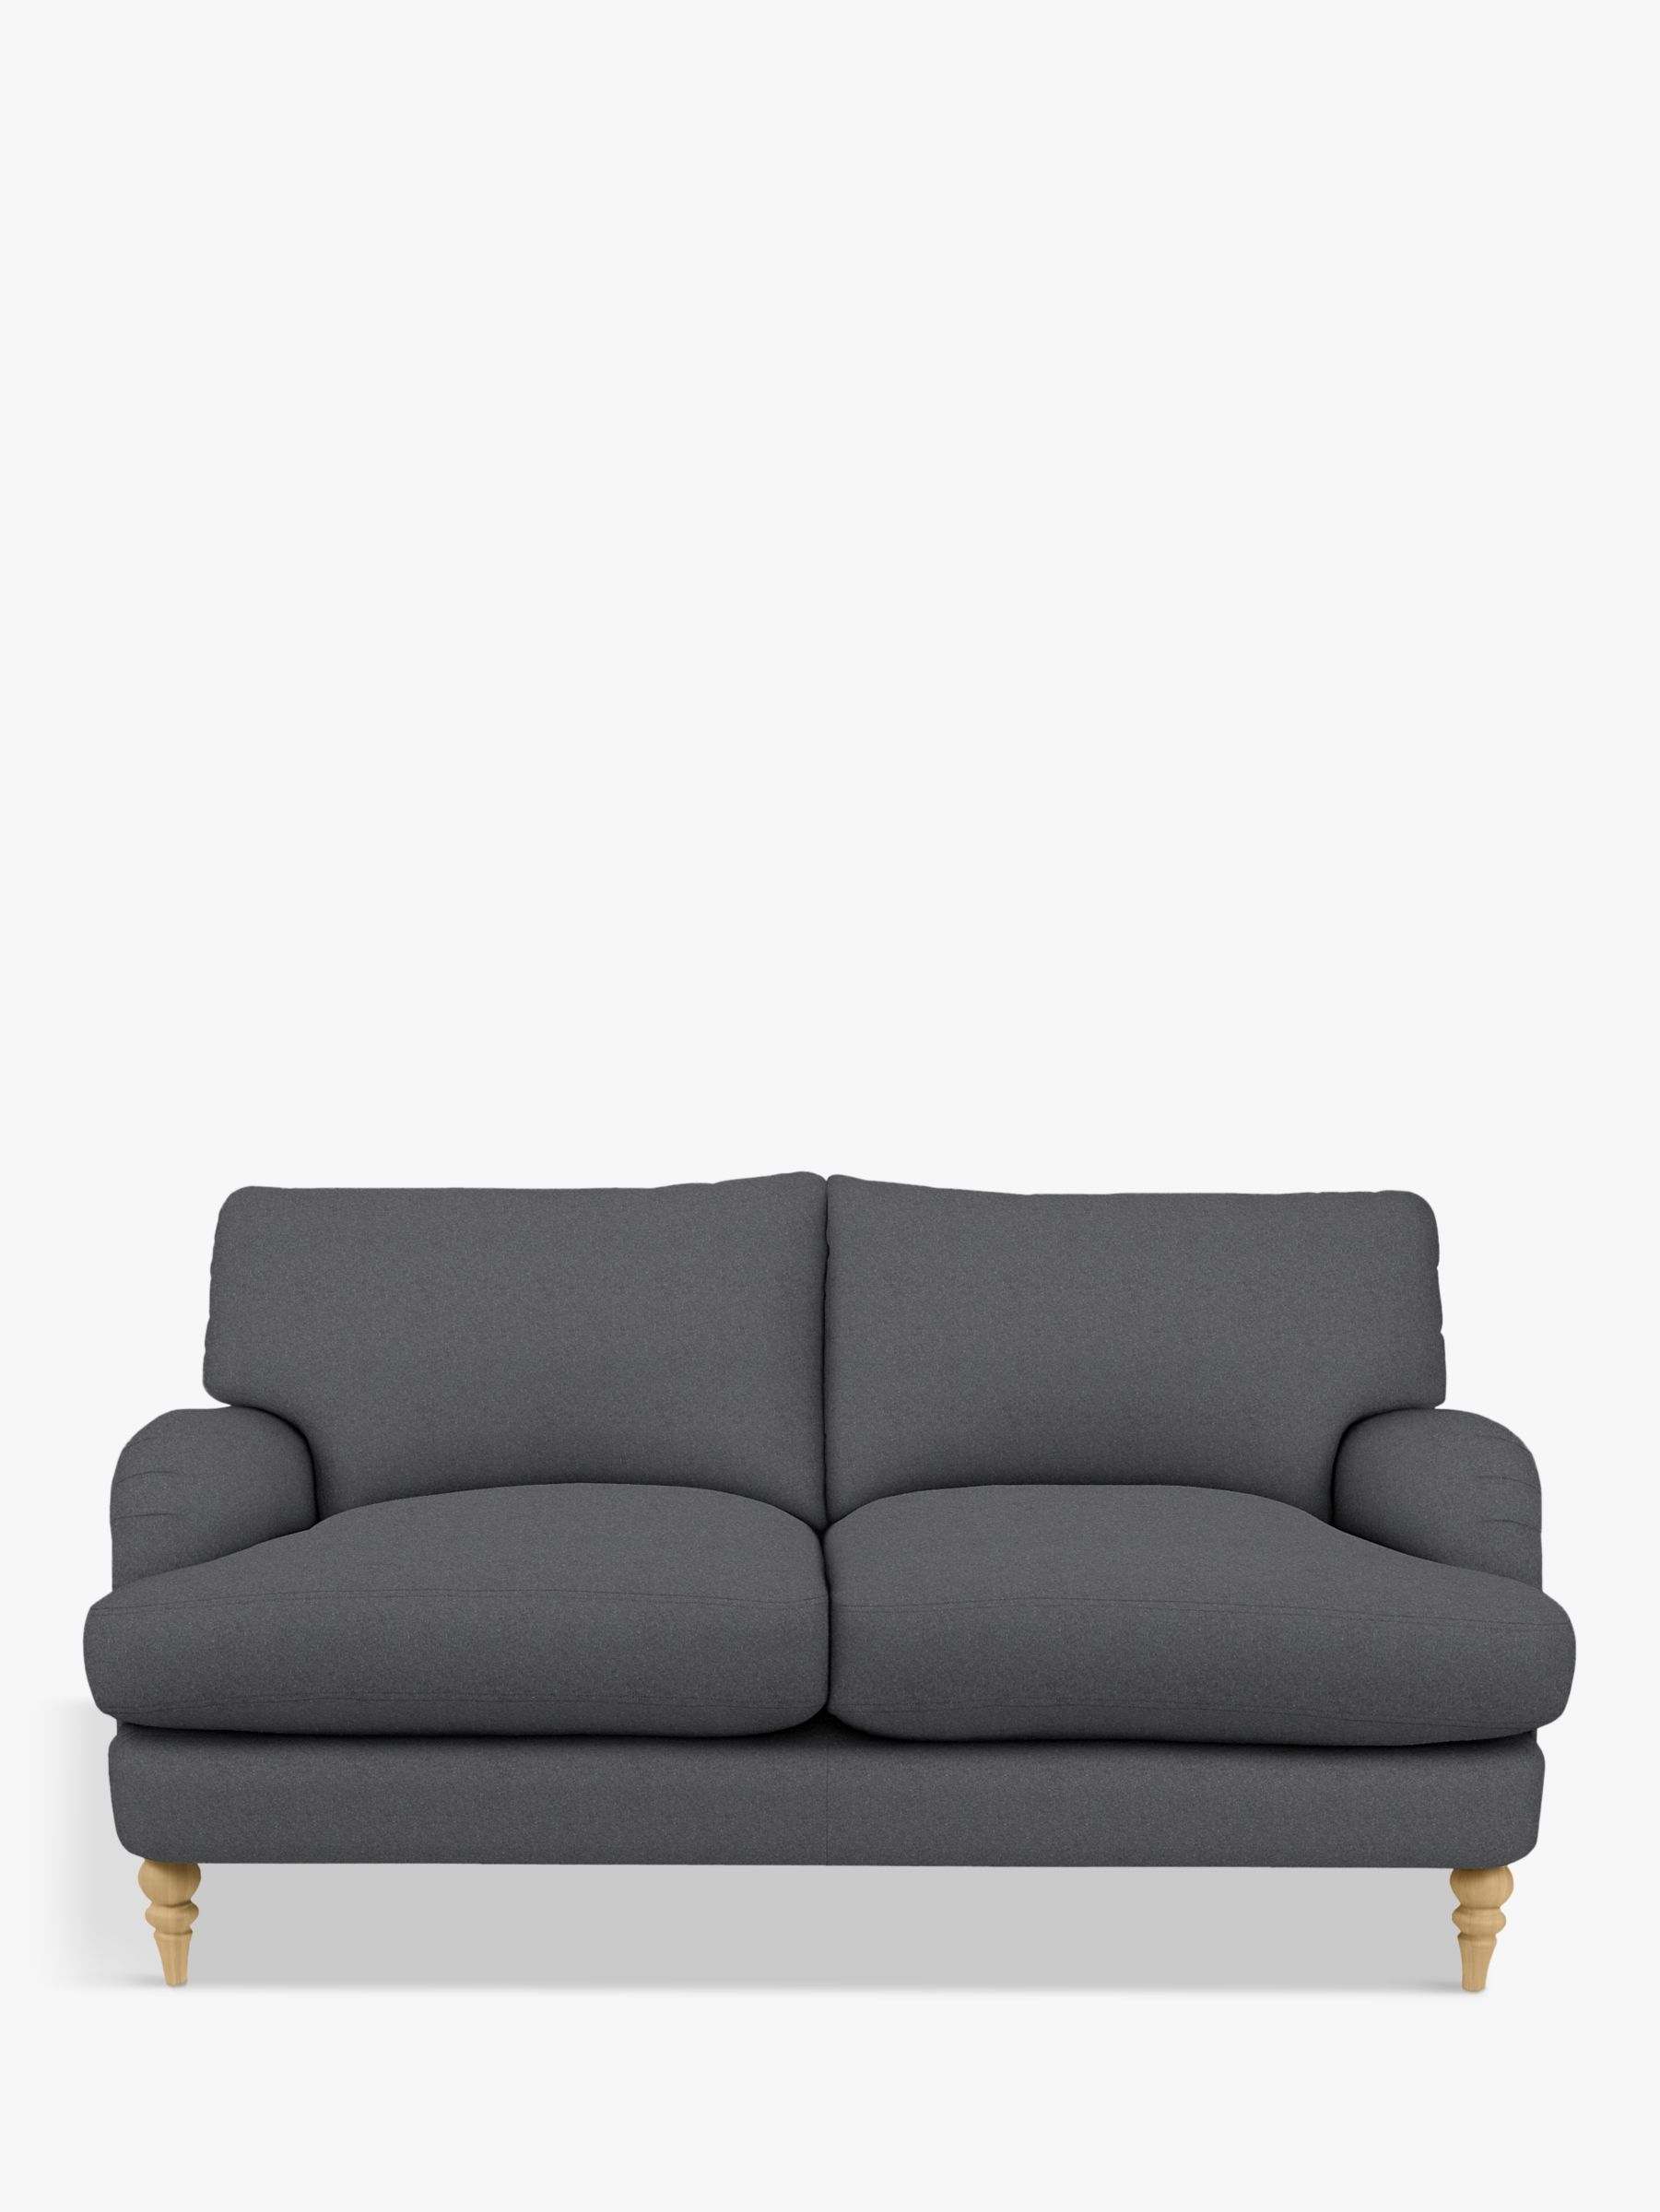 John Lewis & Partners Otley Medium 2 Seater Sofa, Light Leg